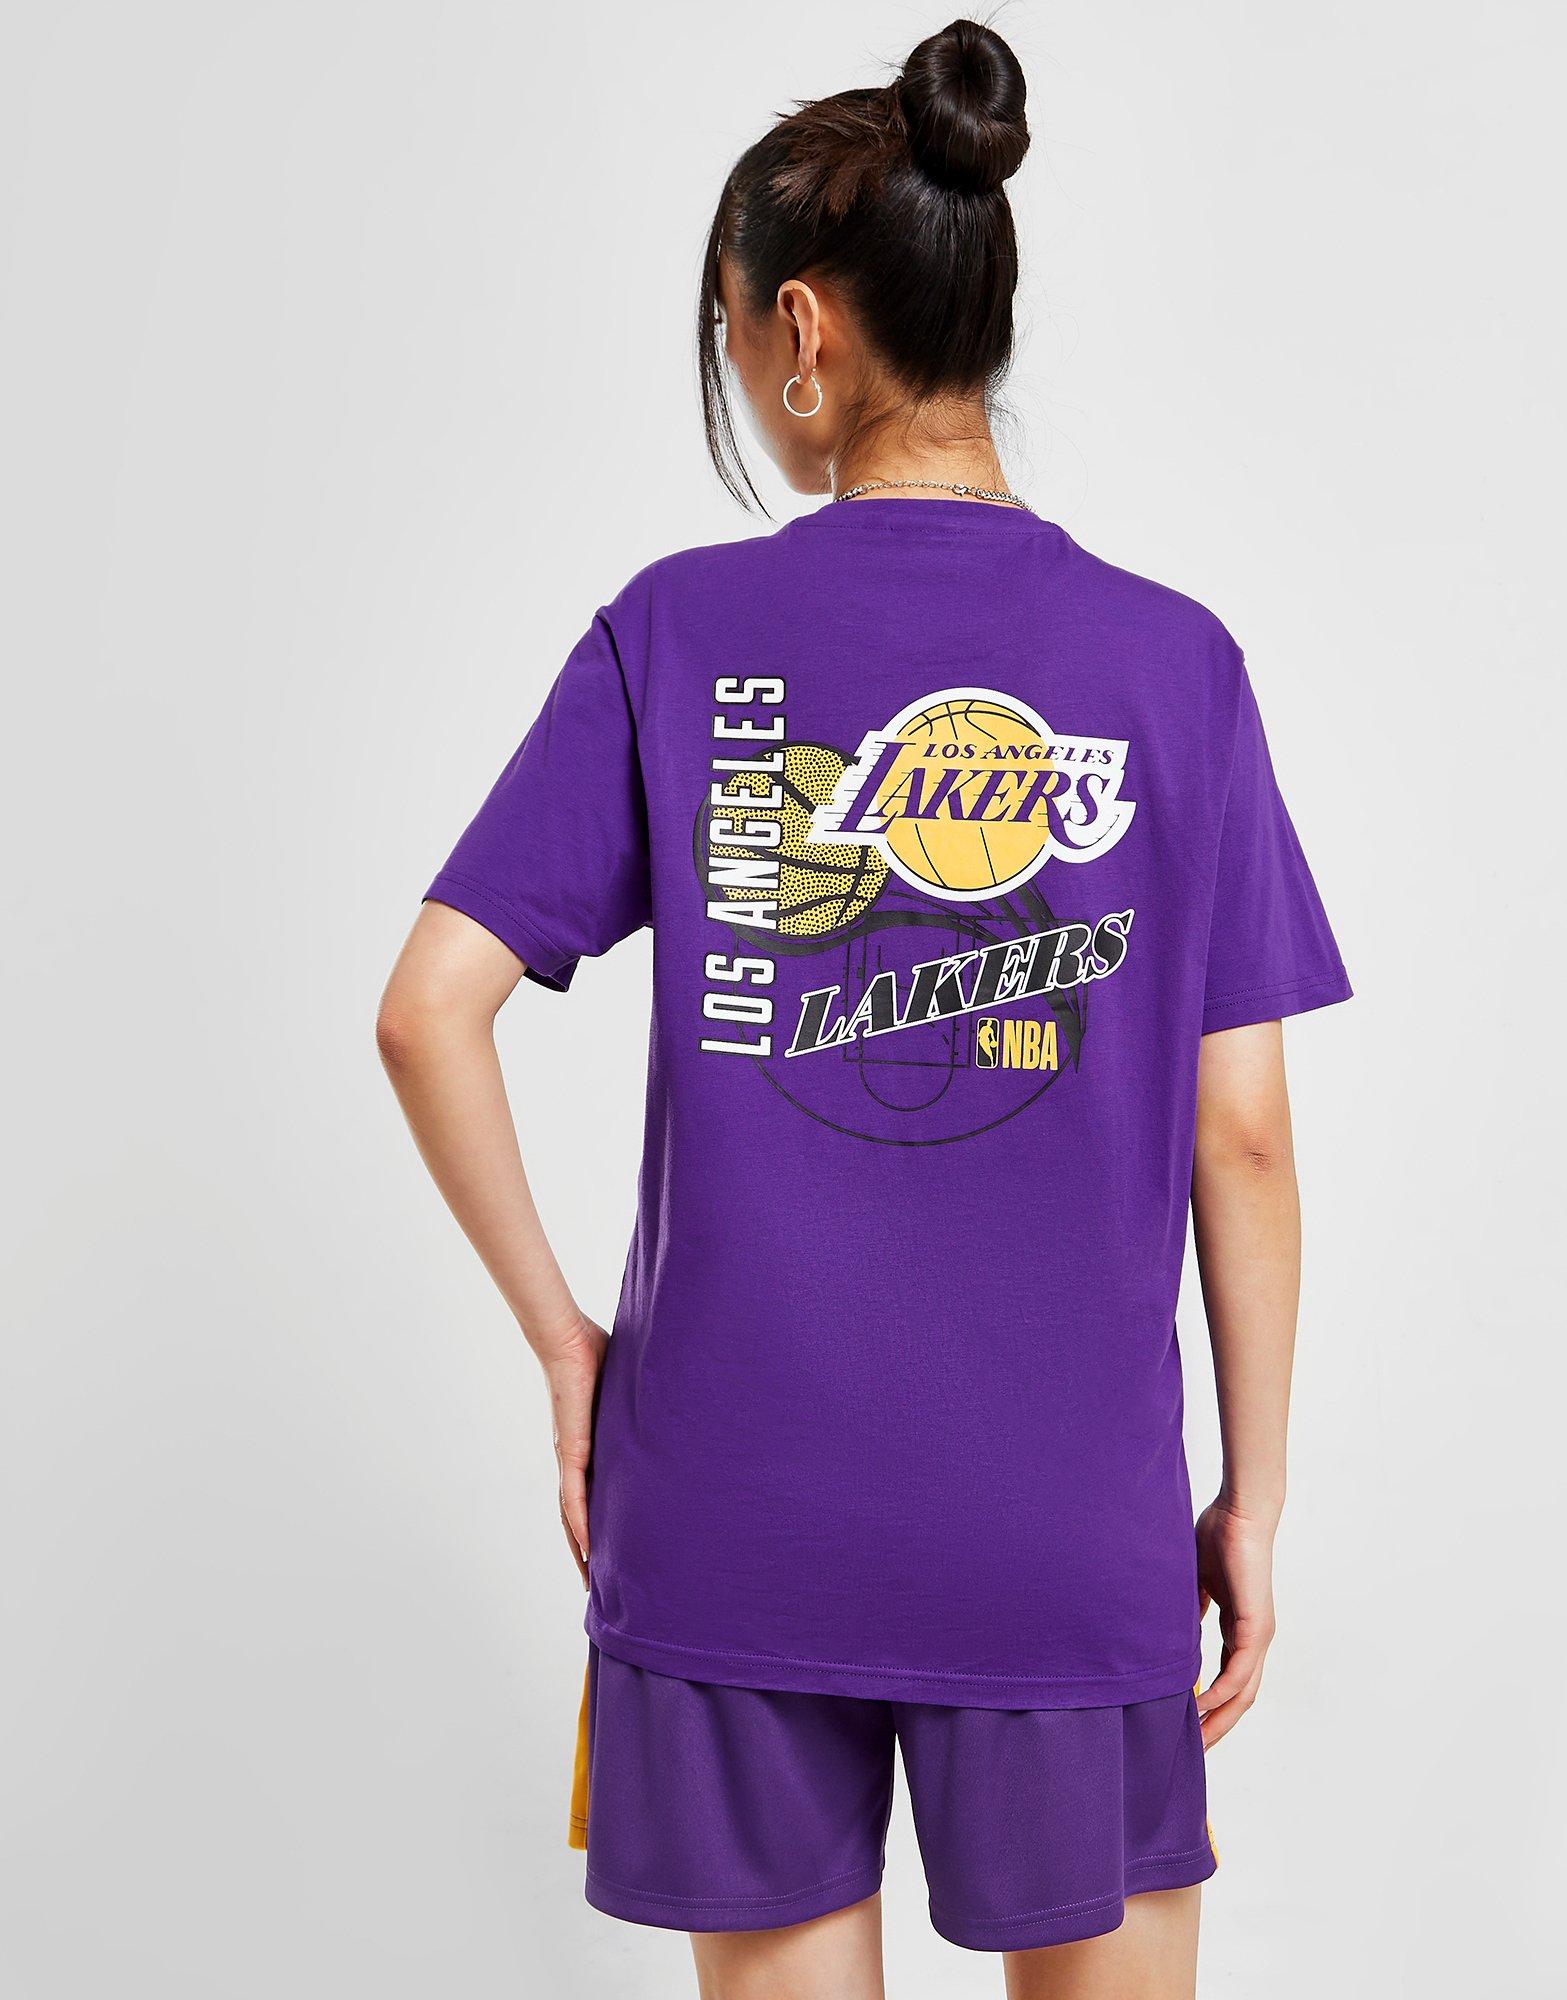 Los Angeles Lakers New Era Raglan Jersey Button-Up T-Shirt - Purple